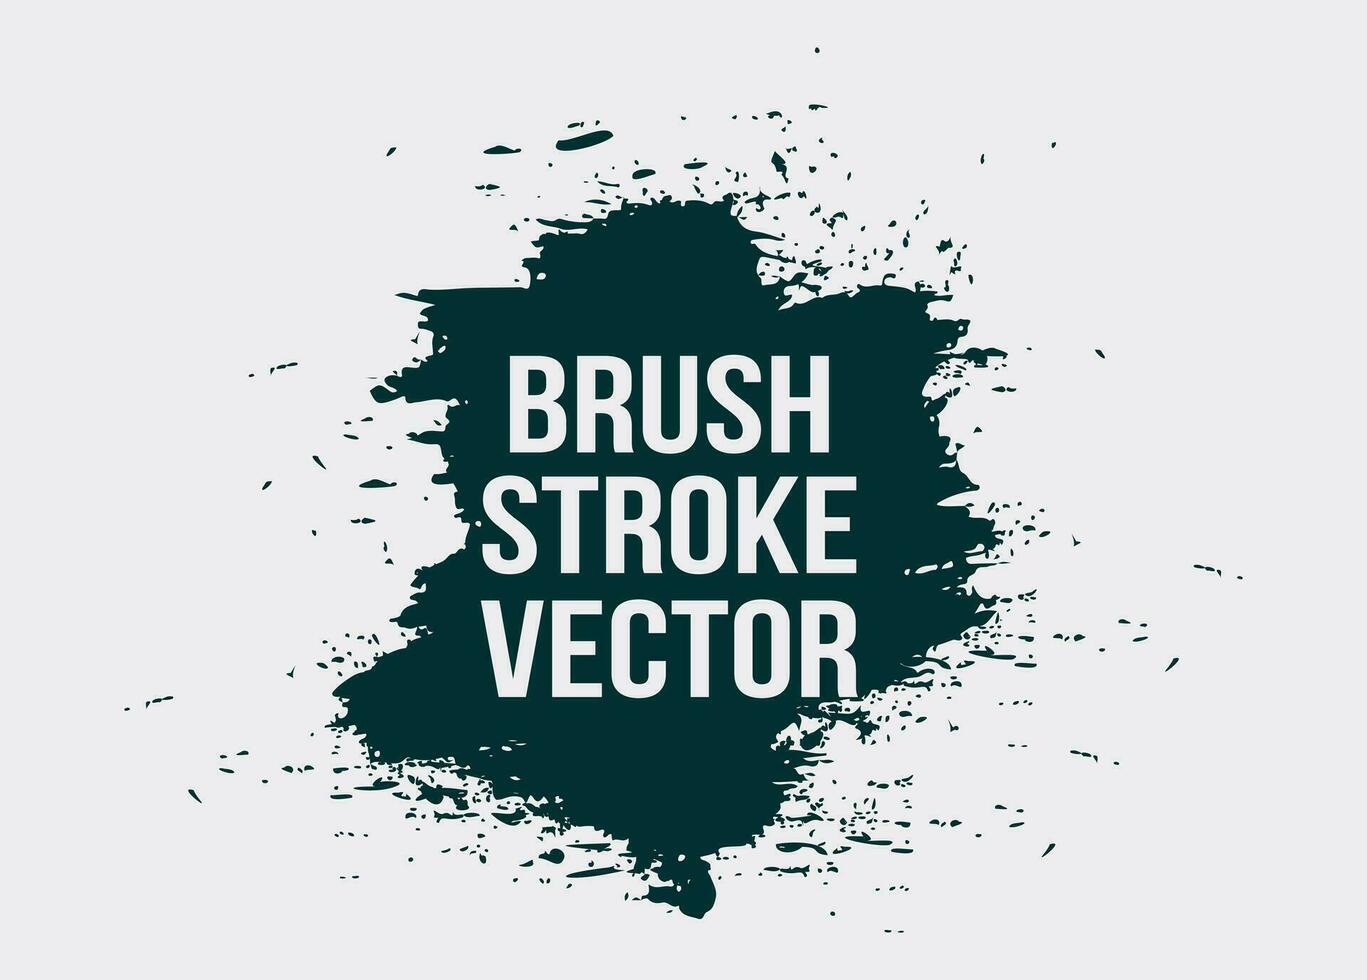 Abstract grunge brush stroke banner vector